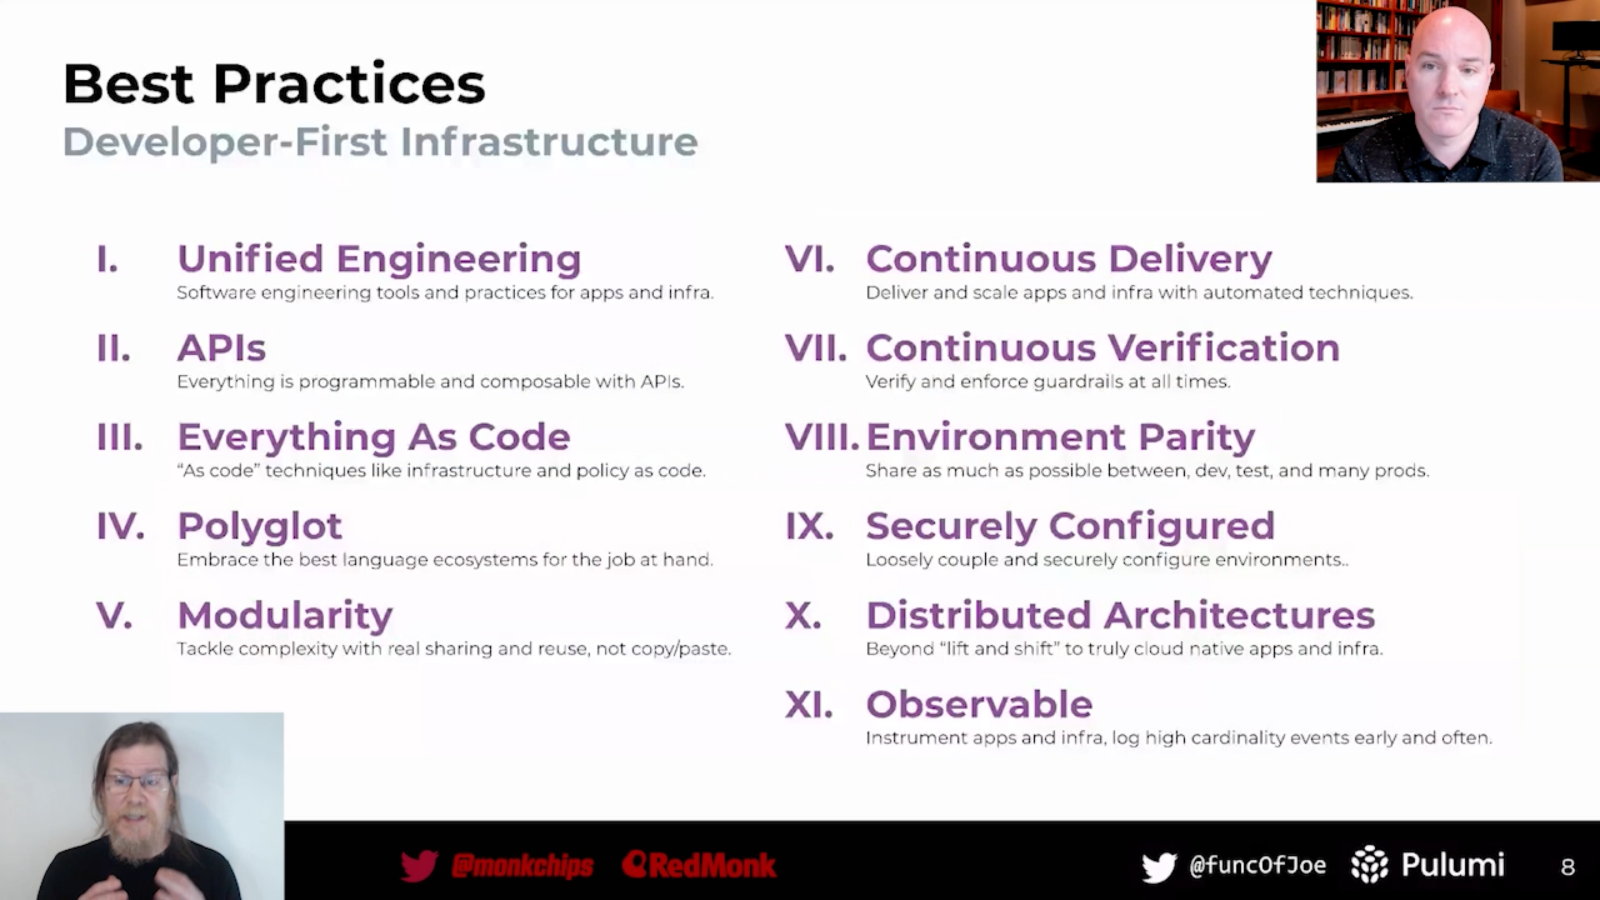 Best practices of developer-first infrastructure